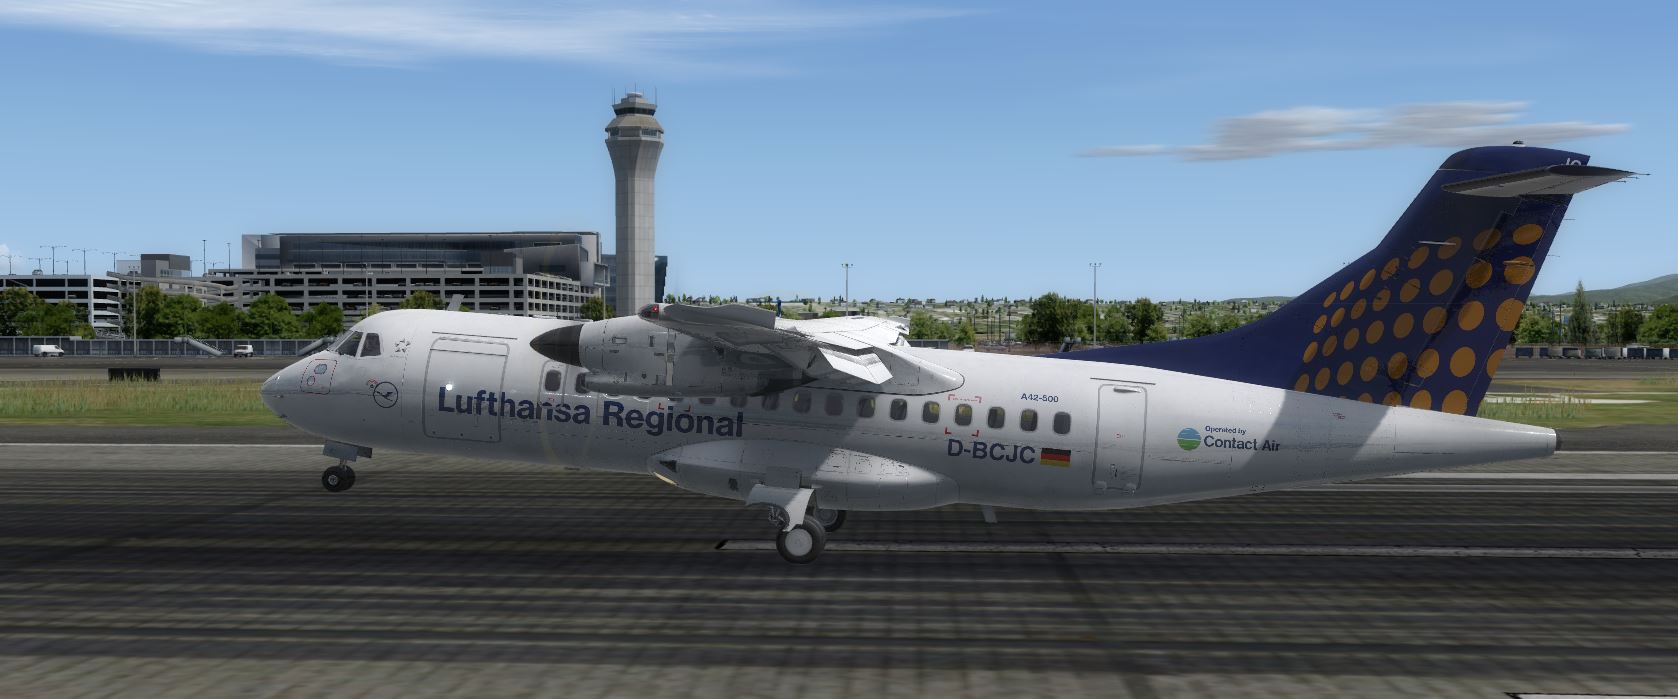 ATR42-500 Lufthansa-5739 